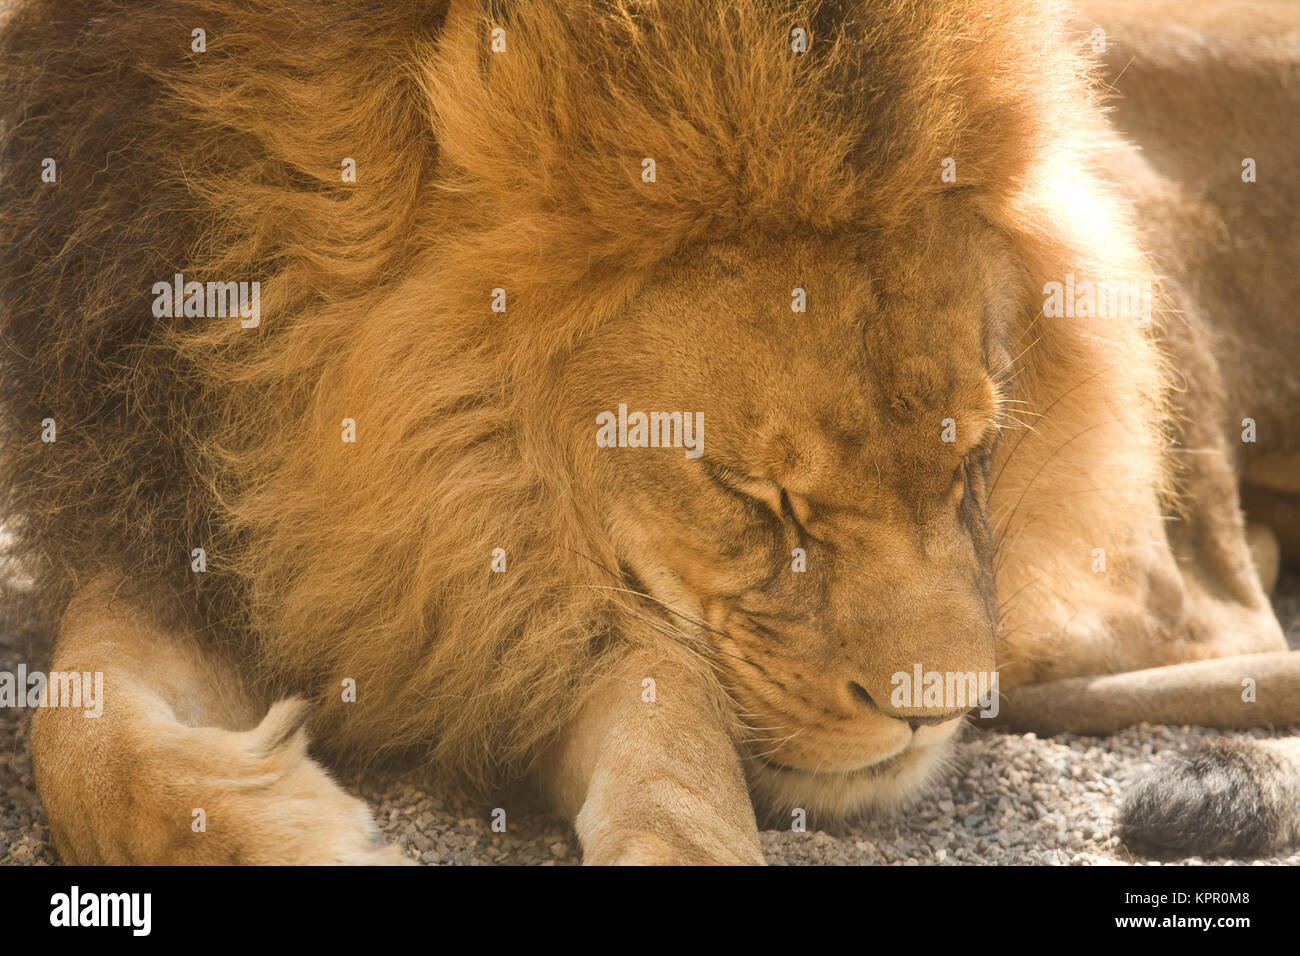 Europe, Germany, Wuppertal, the Zoo, male lion (Panthera leo).  Europa, Deutschland, Wuppertal, Zoo Wuppertal, maennlicher Loewe (Panthera leo). Stock Photo